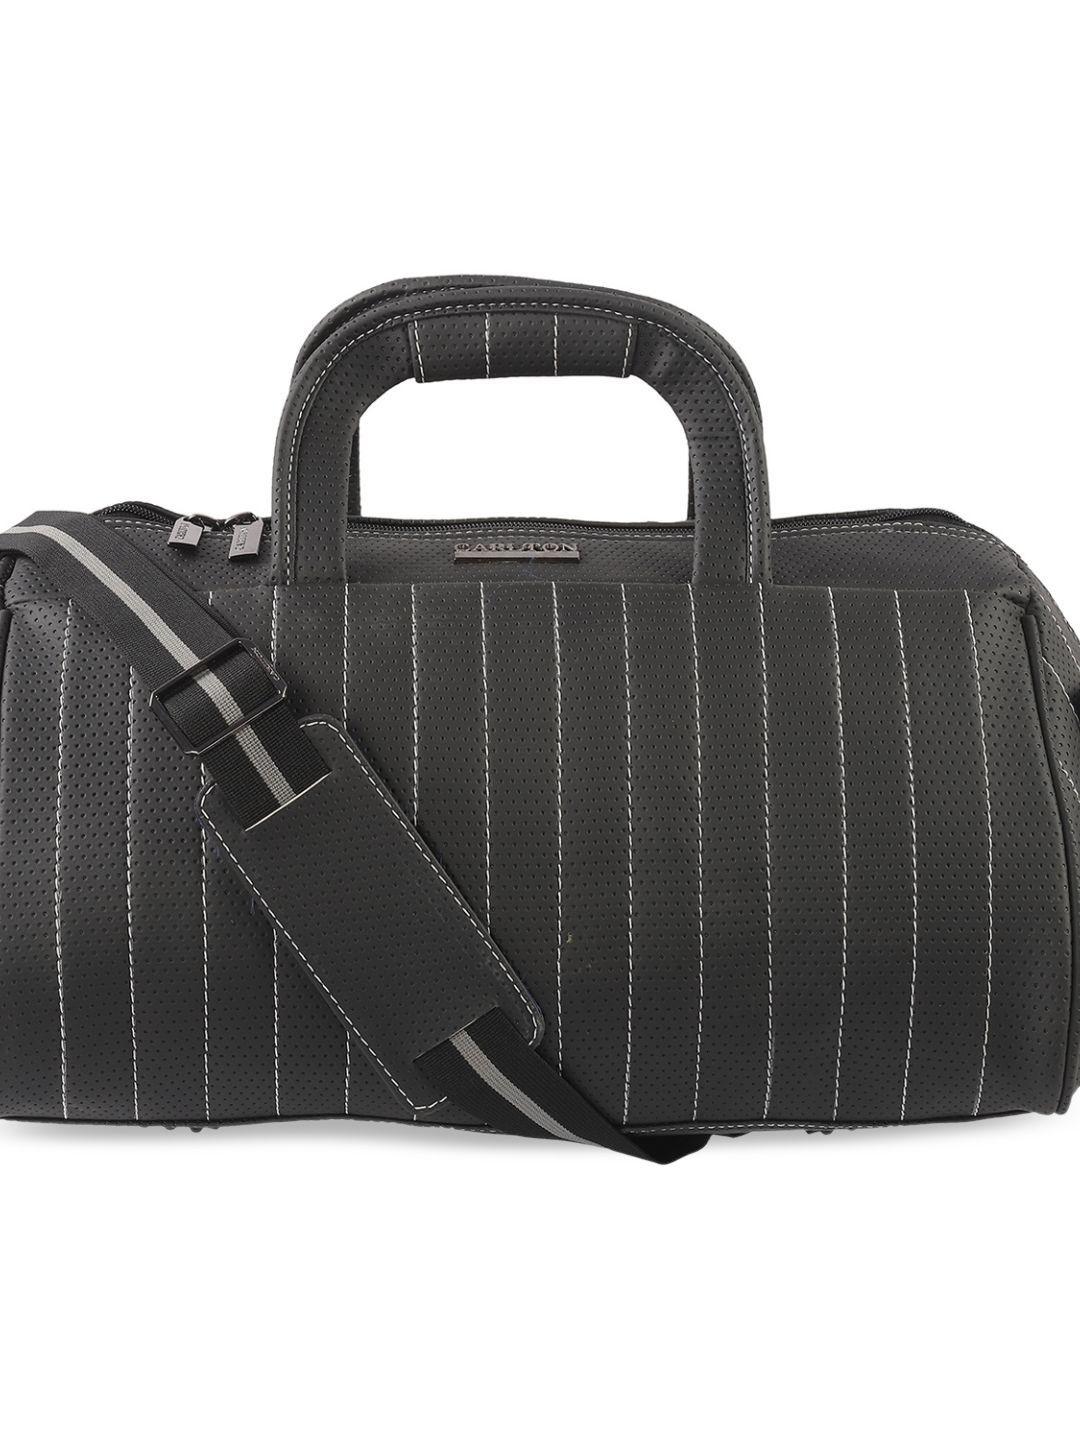 carlton-london-striped-medium-travel-duffel-bag